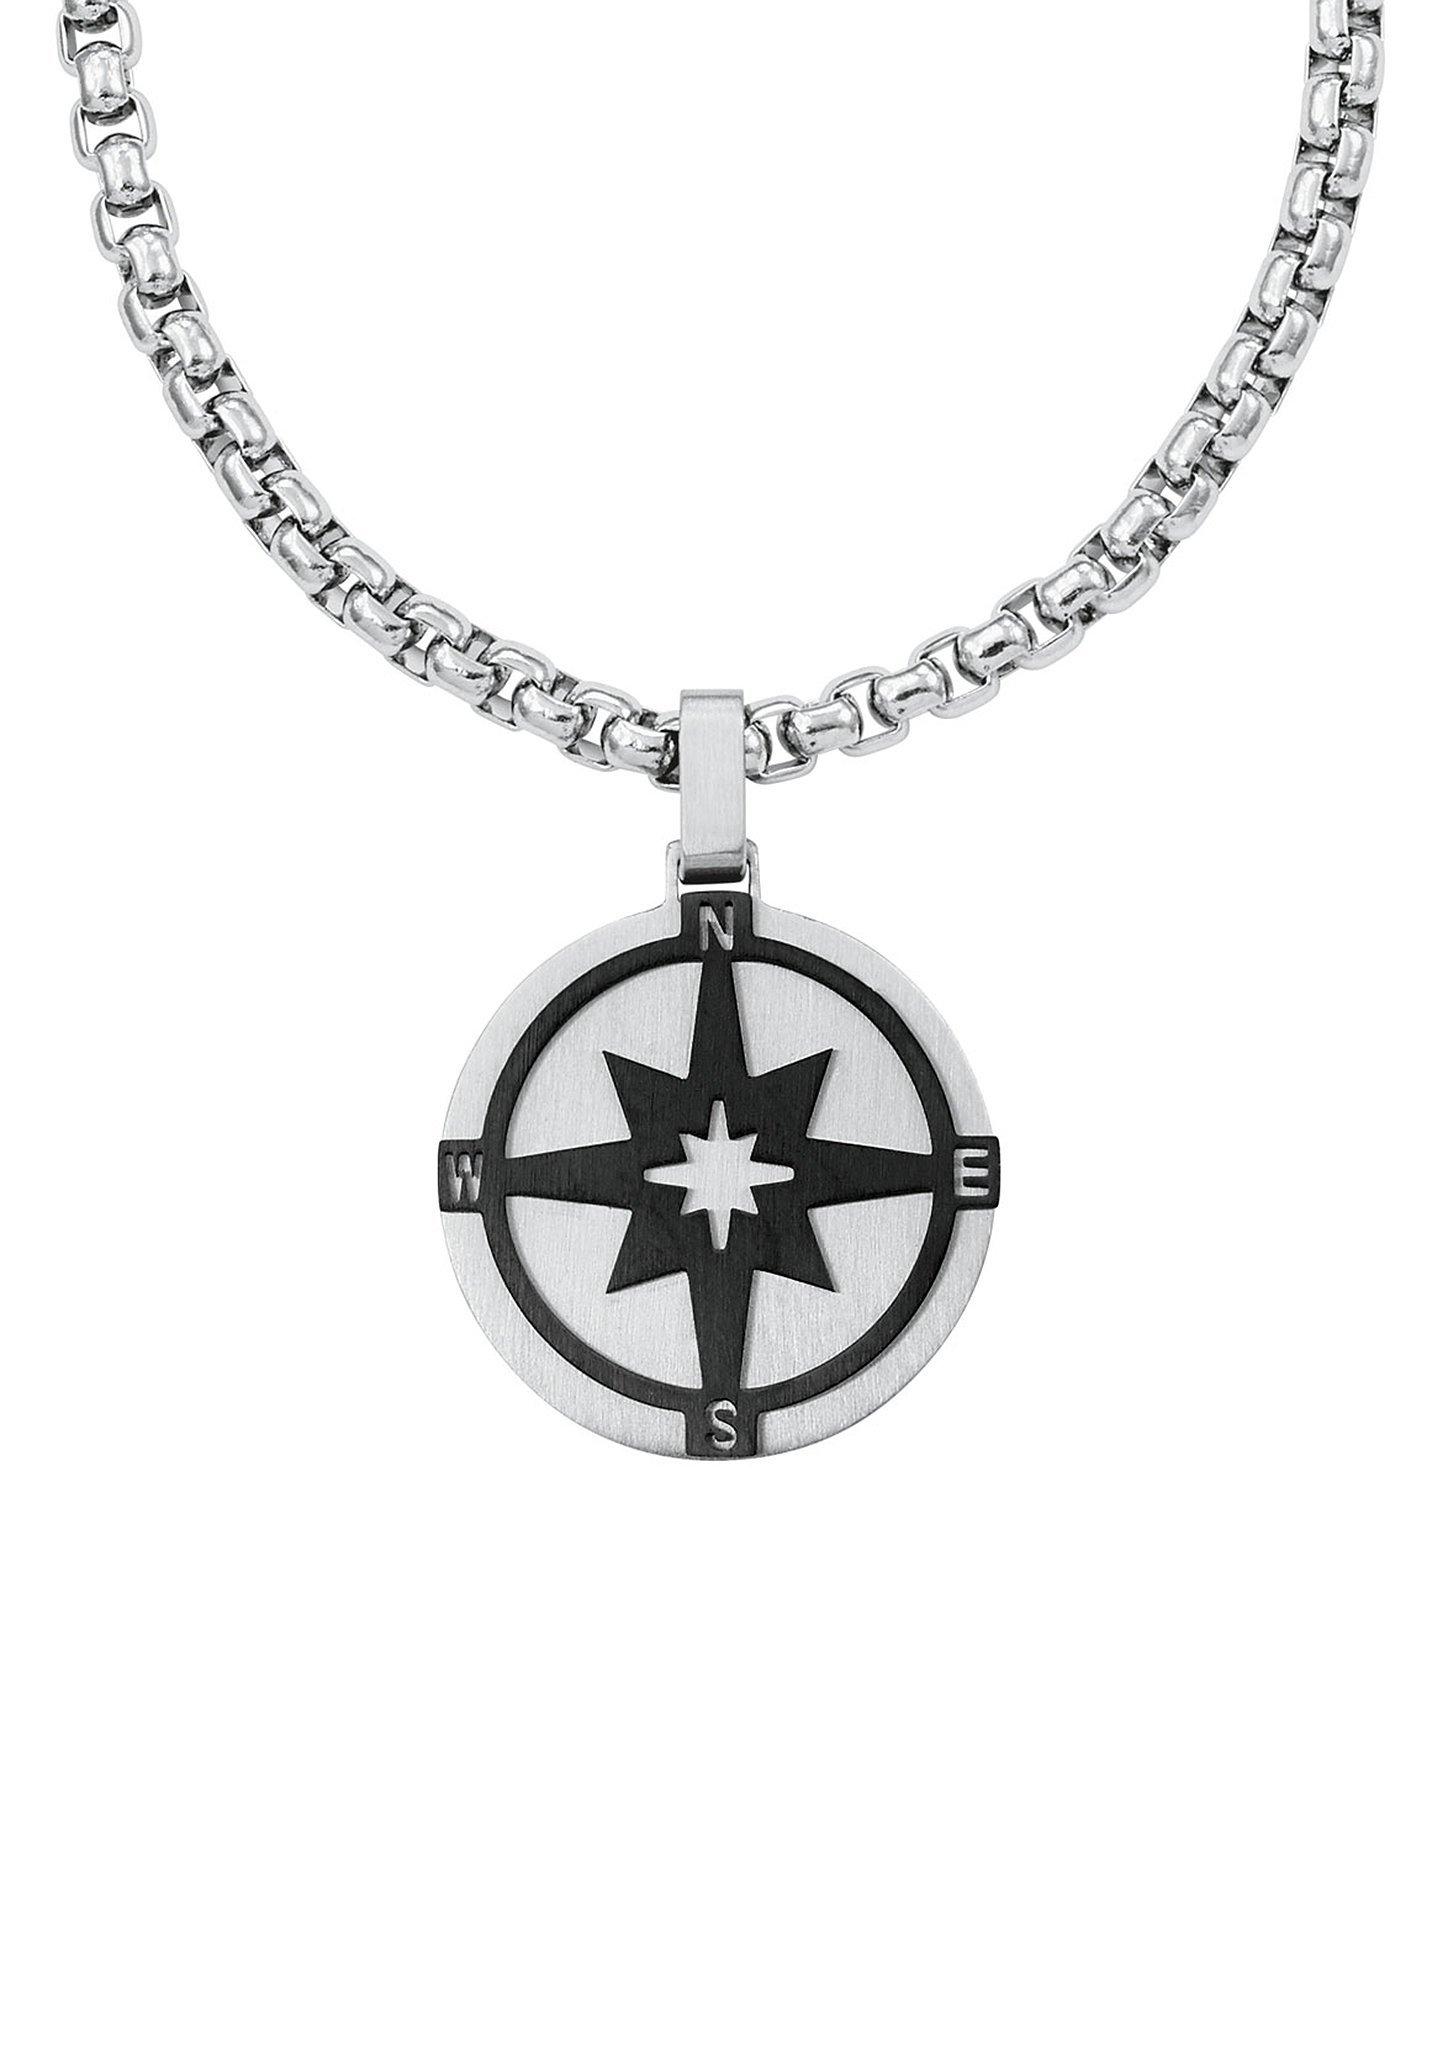 Edelstahl-Halskette Kompass silber 